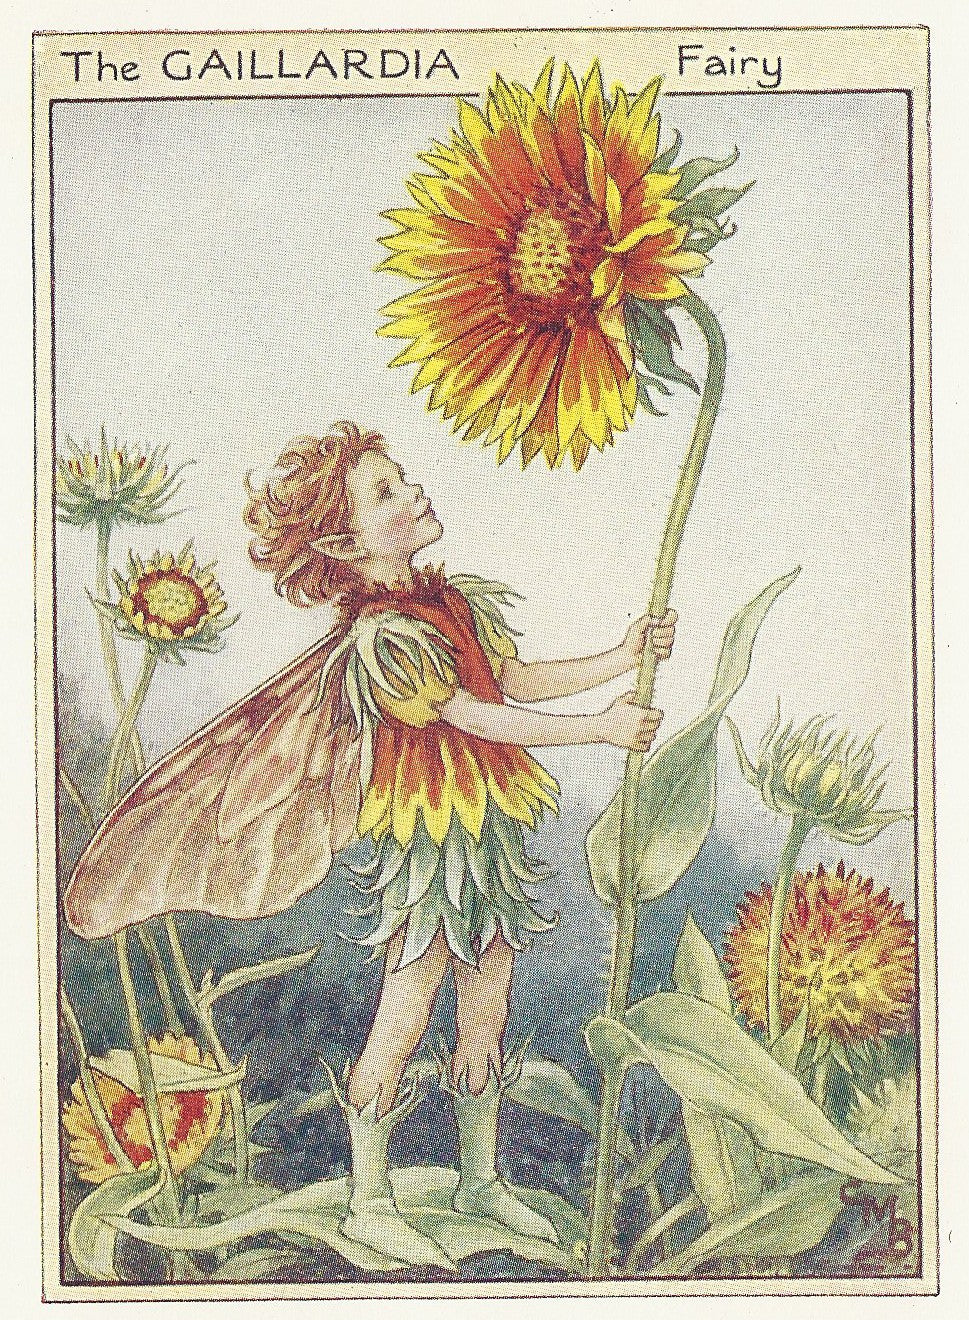 Gaillardia Flower Fairy of the Garden guaranteed vintage print